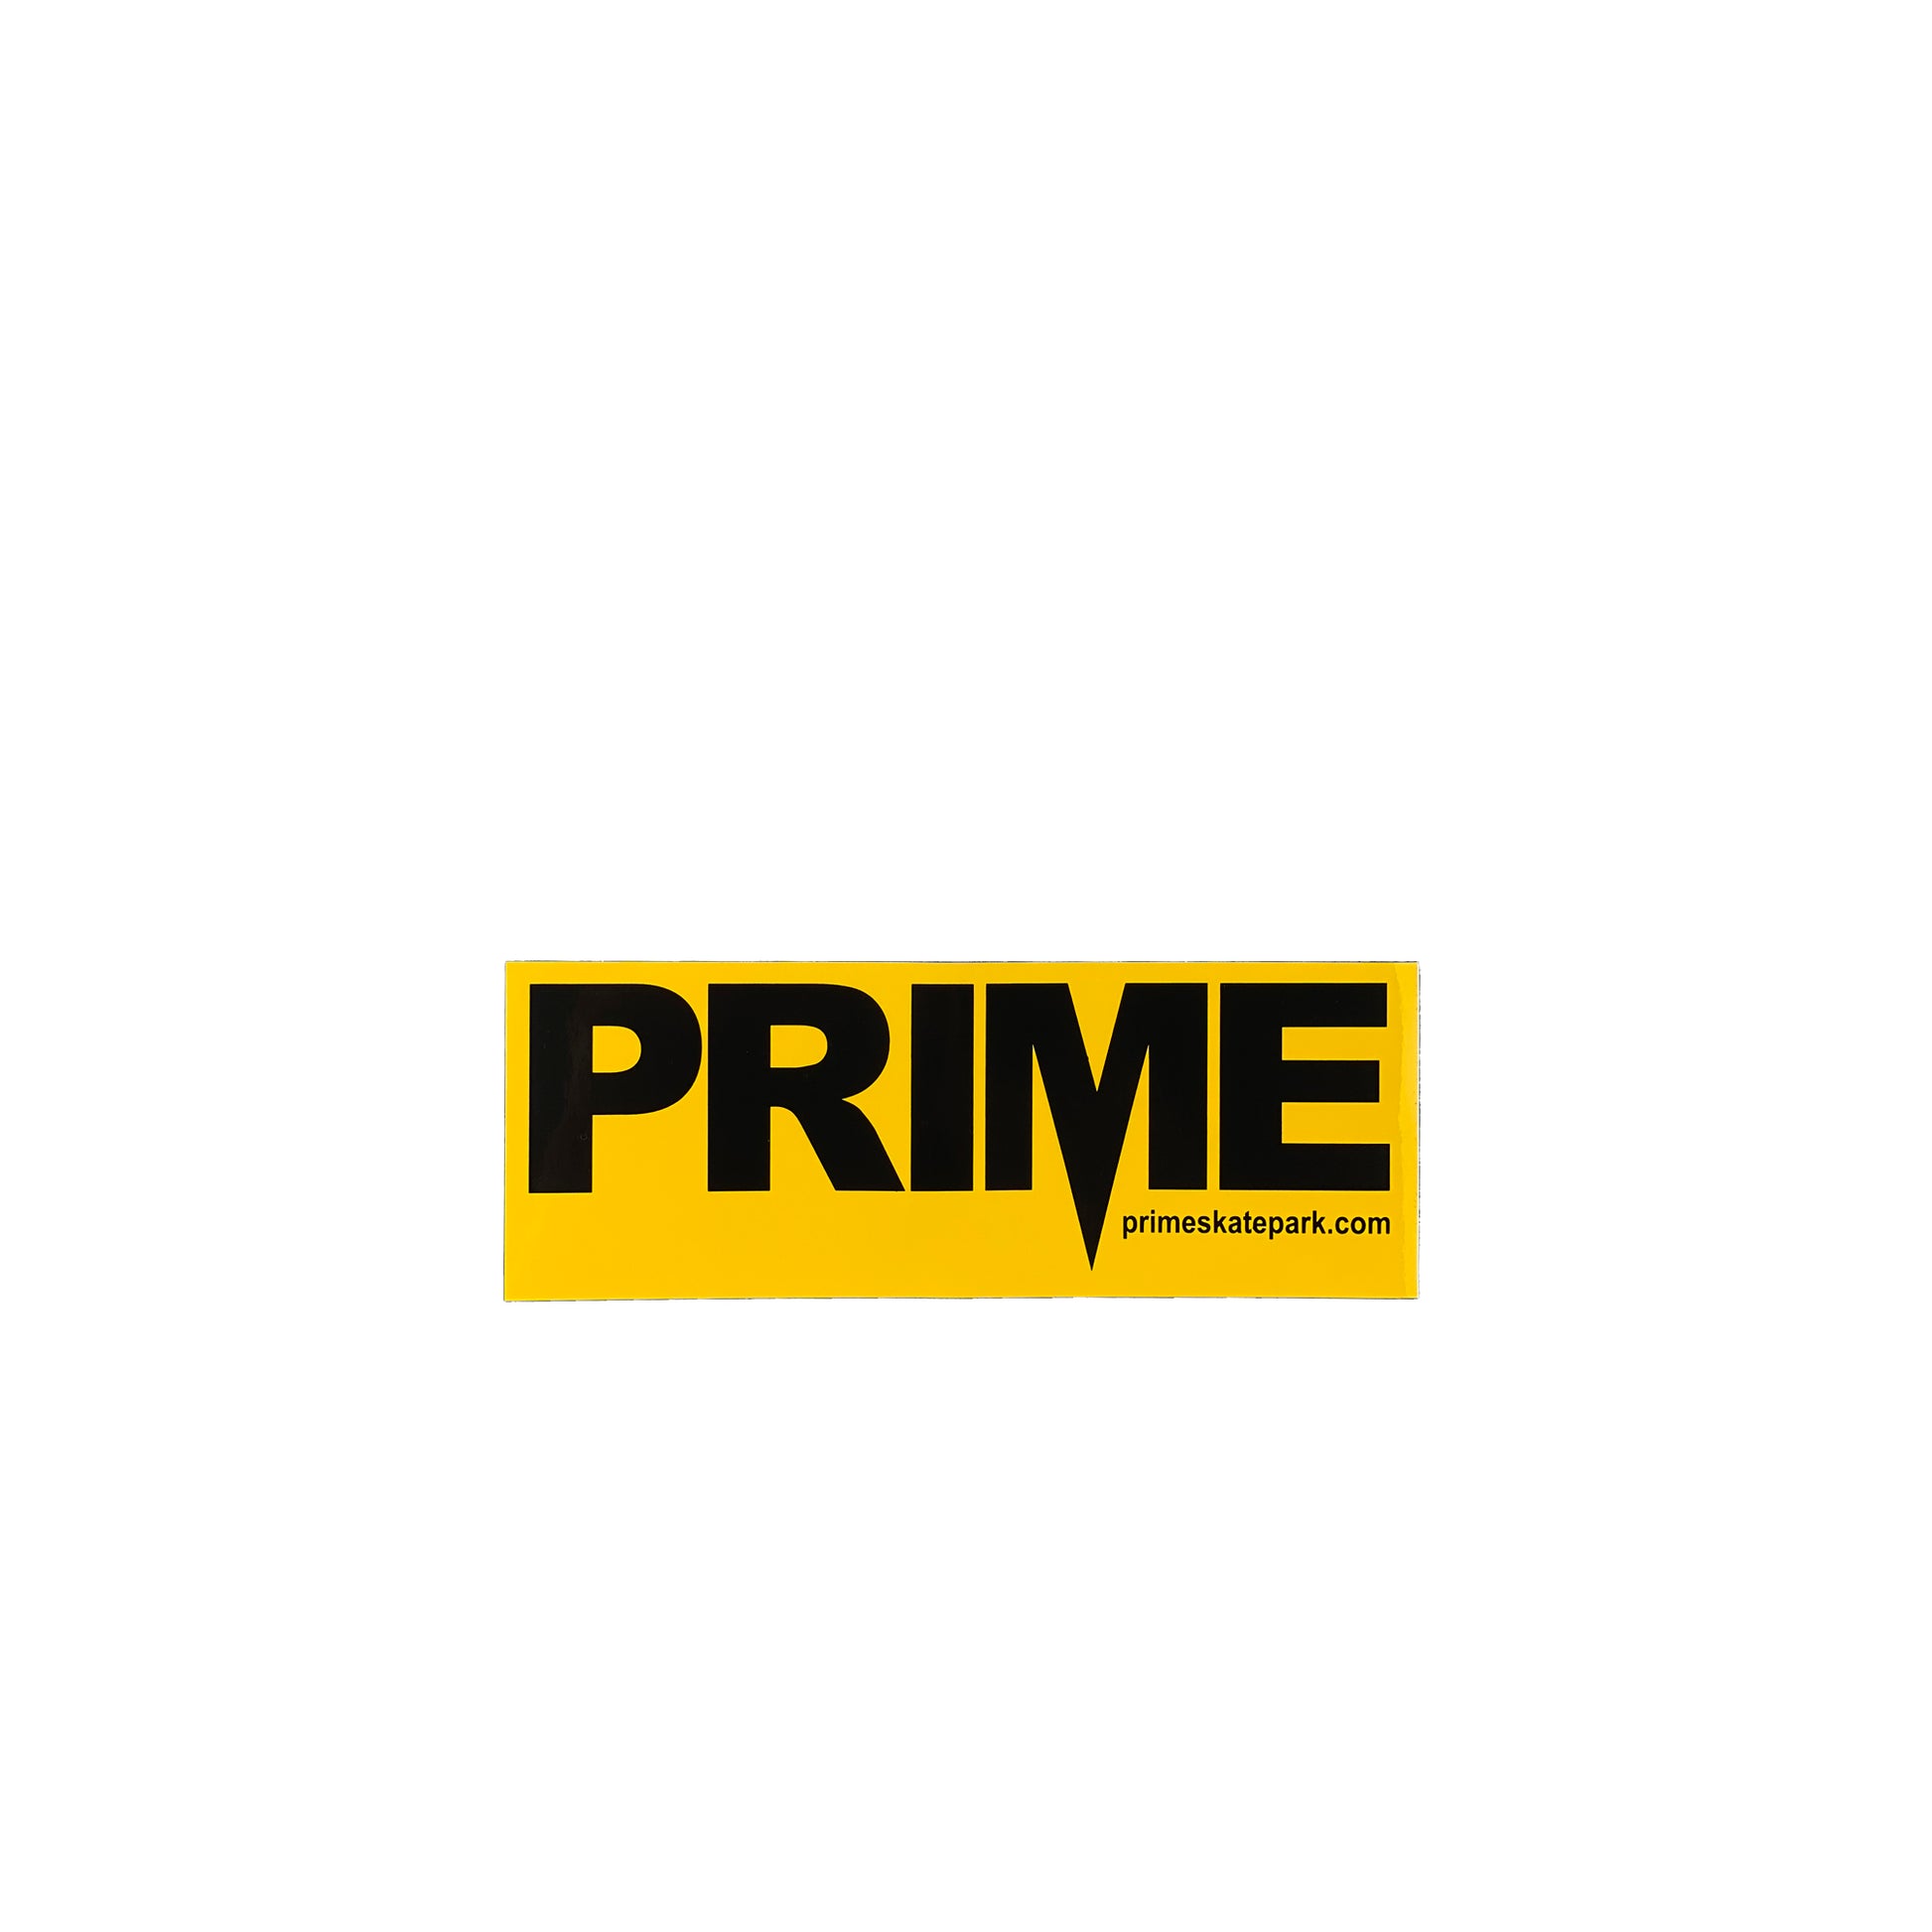 Prime Delux OG SP Sticker M - Taxi Yellow / Black - Prime Delux Store